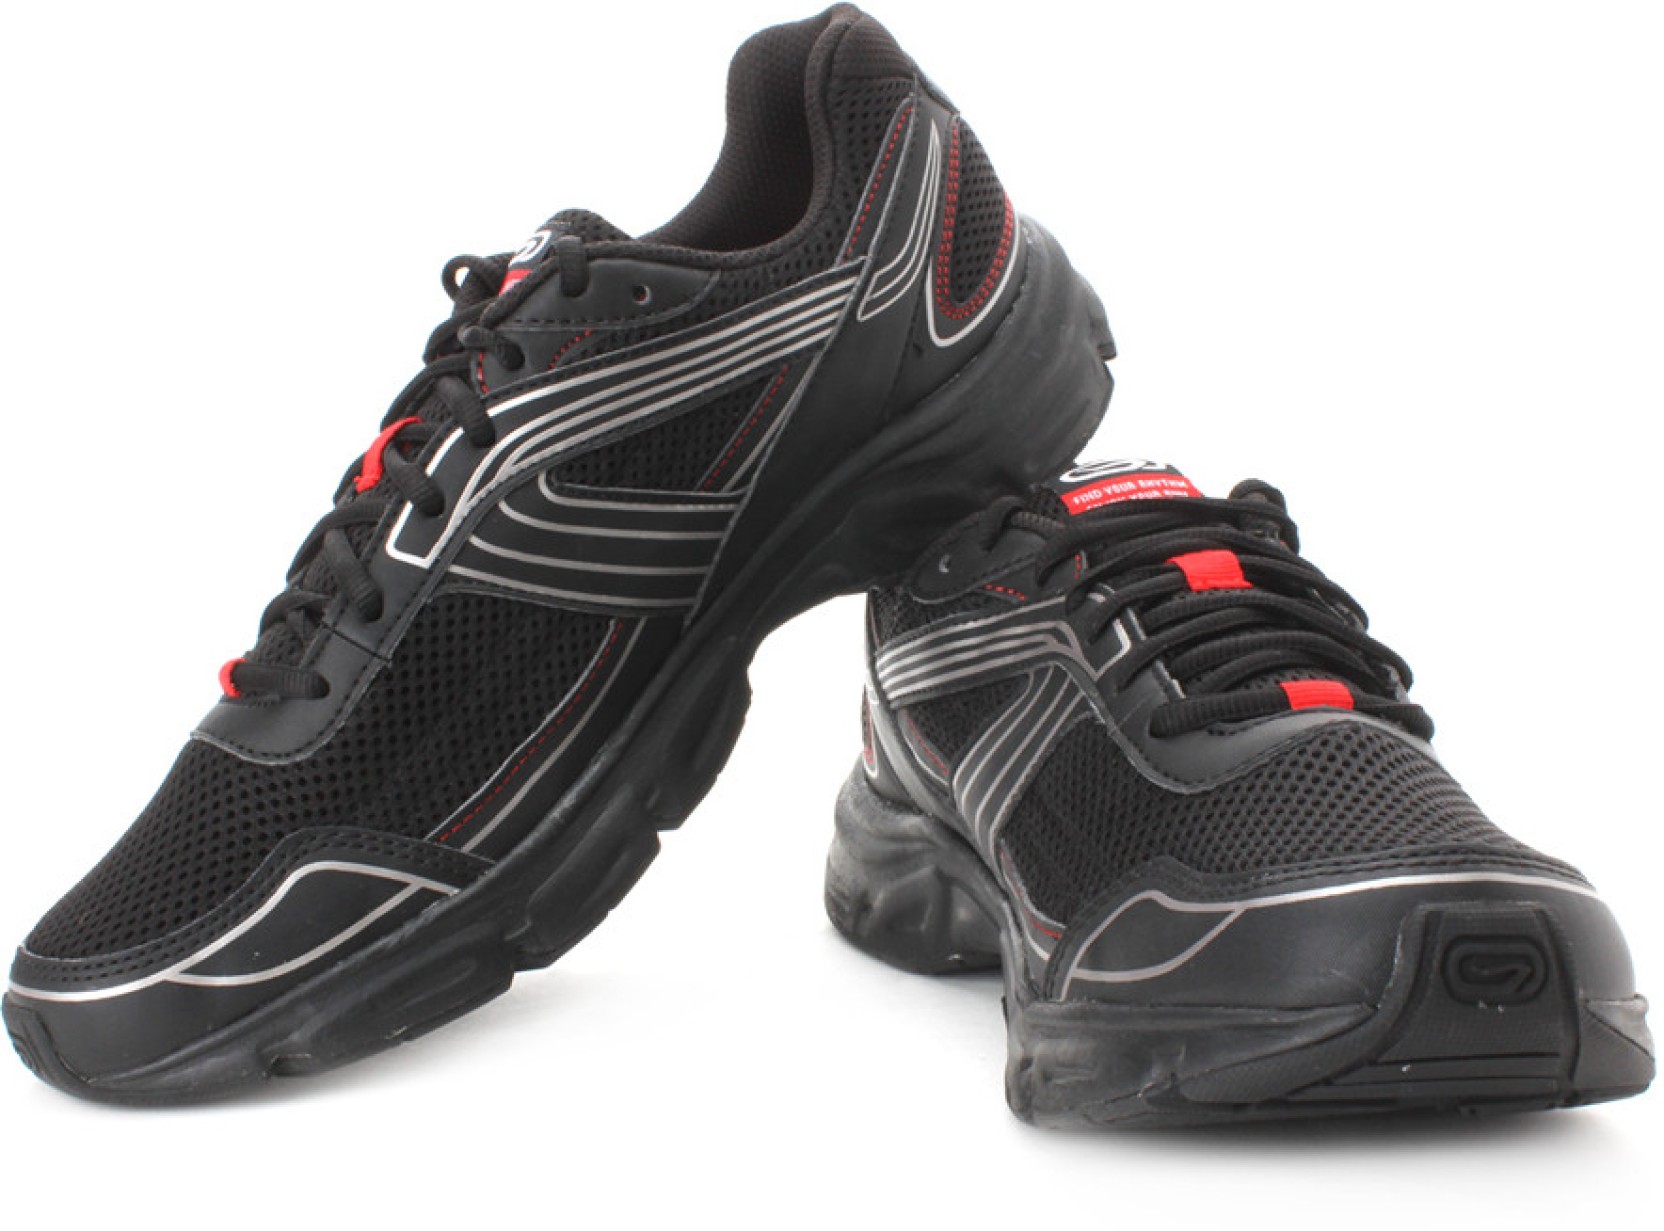 Kalenji by Decathlon Ekiden 75 Running Shoes - Buy Black Color Kalenji ...